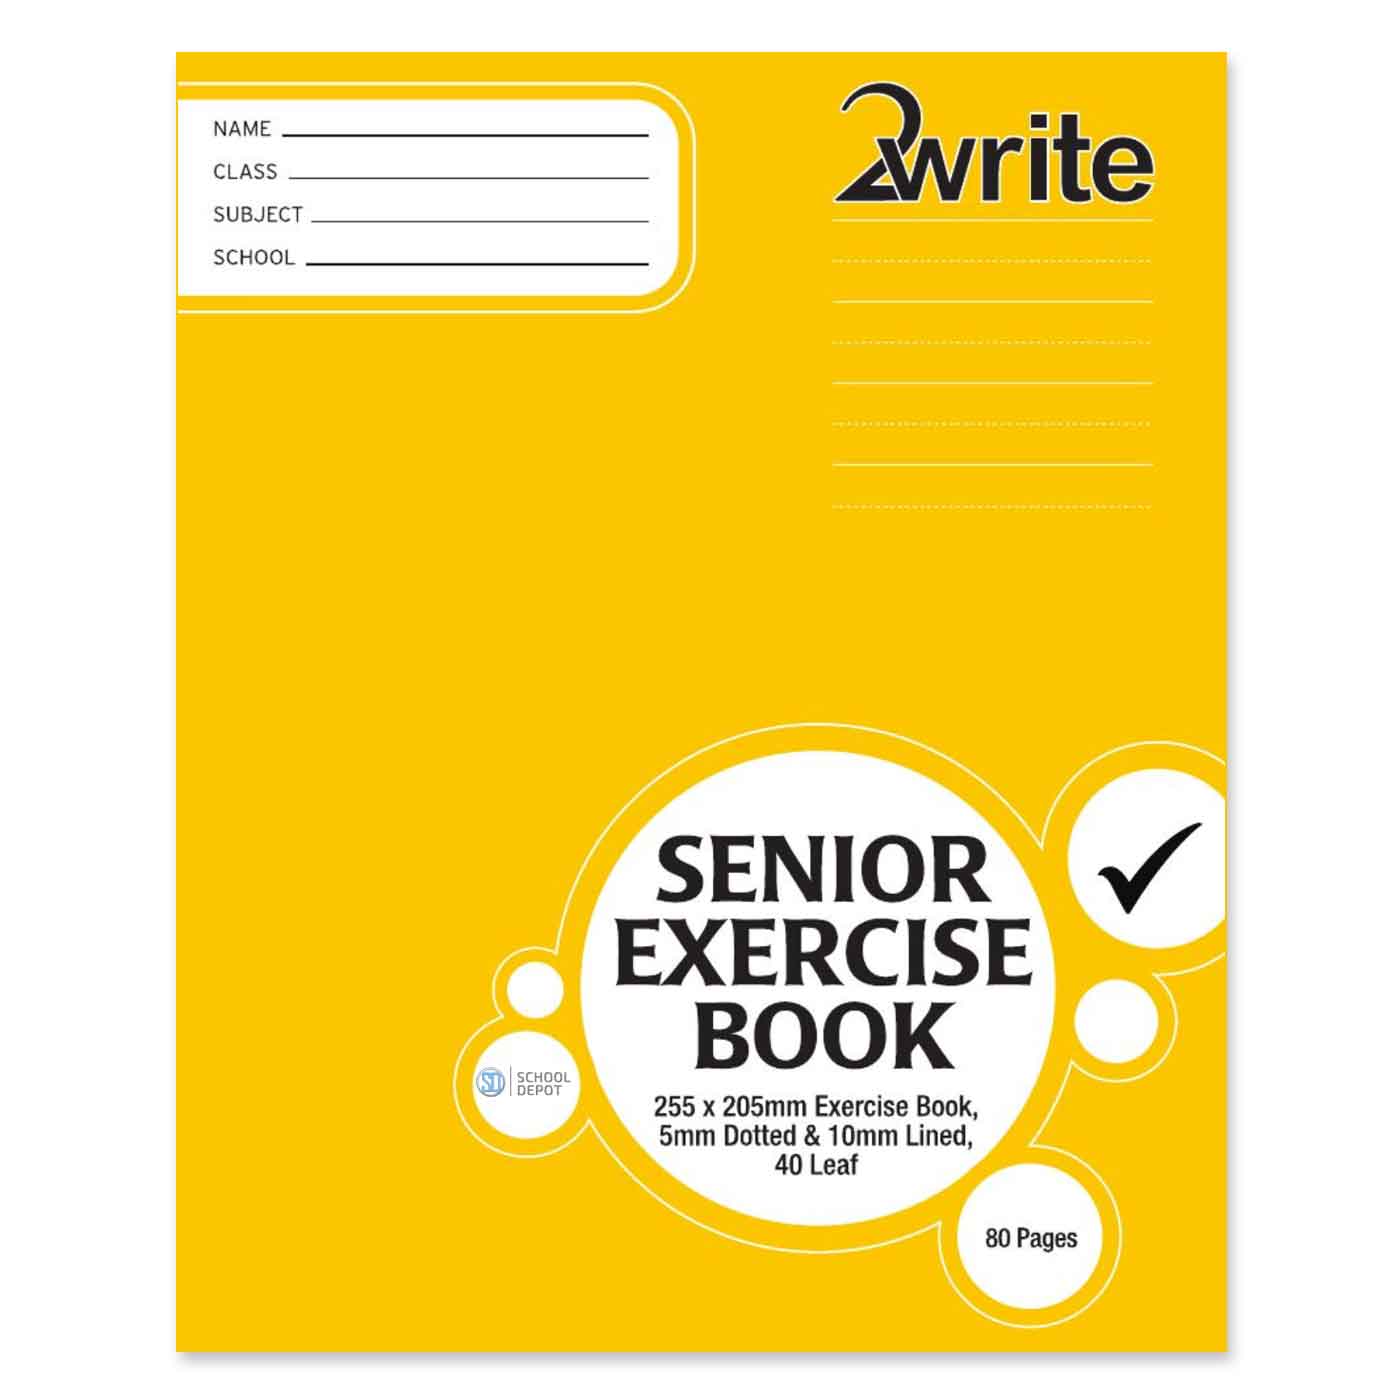 2Write WBS Senior Writing Exercise Book 40 Leaves